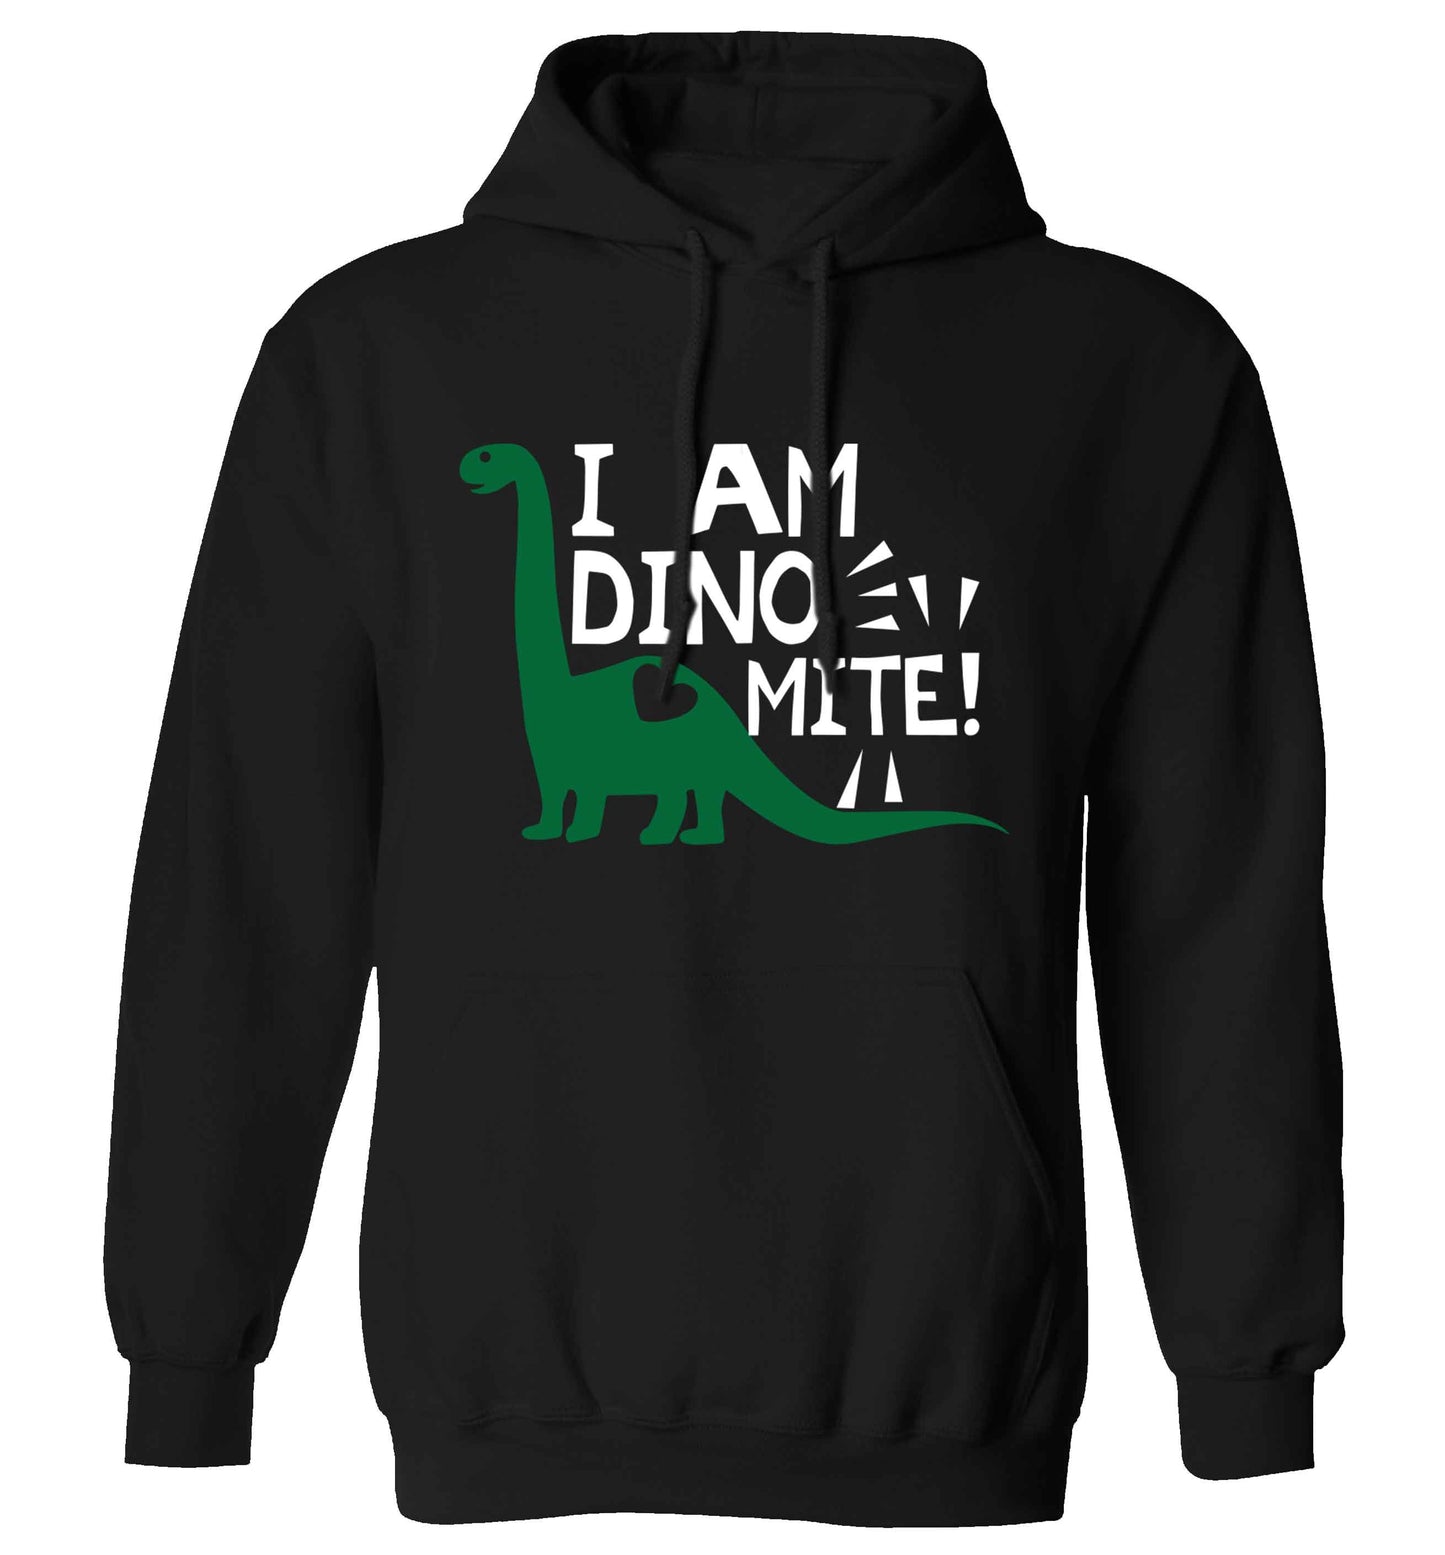 I am dinomite! adults unisex black hoodie 2XL